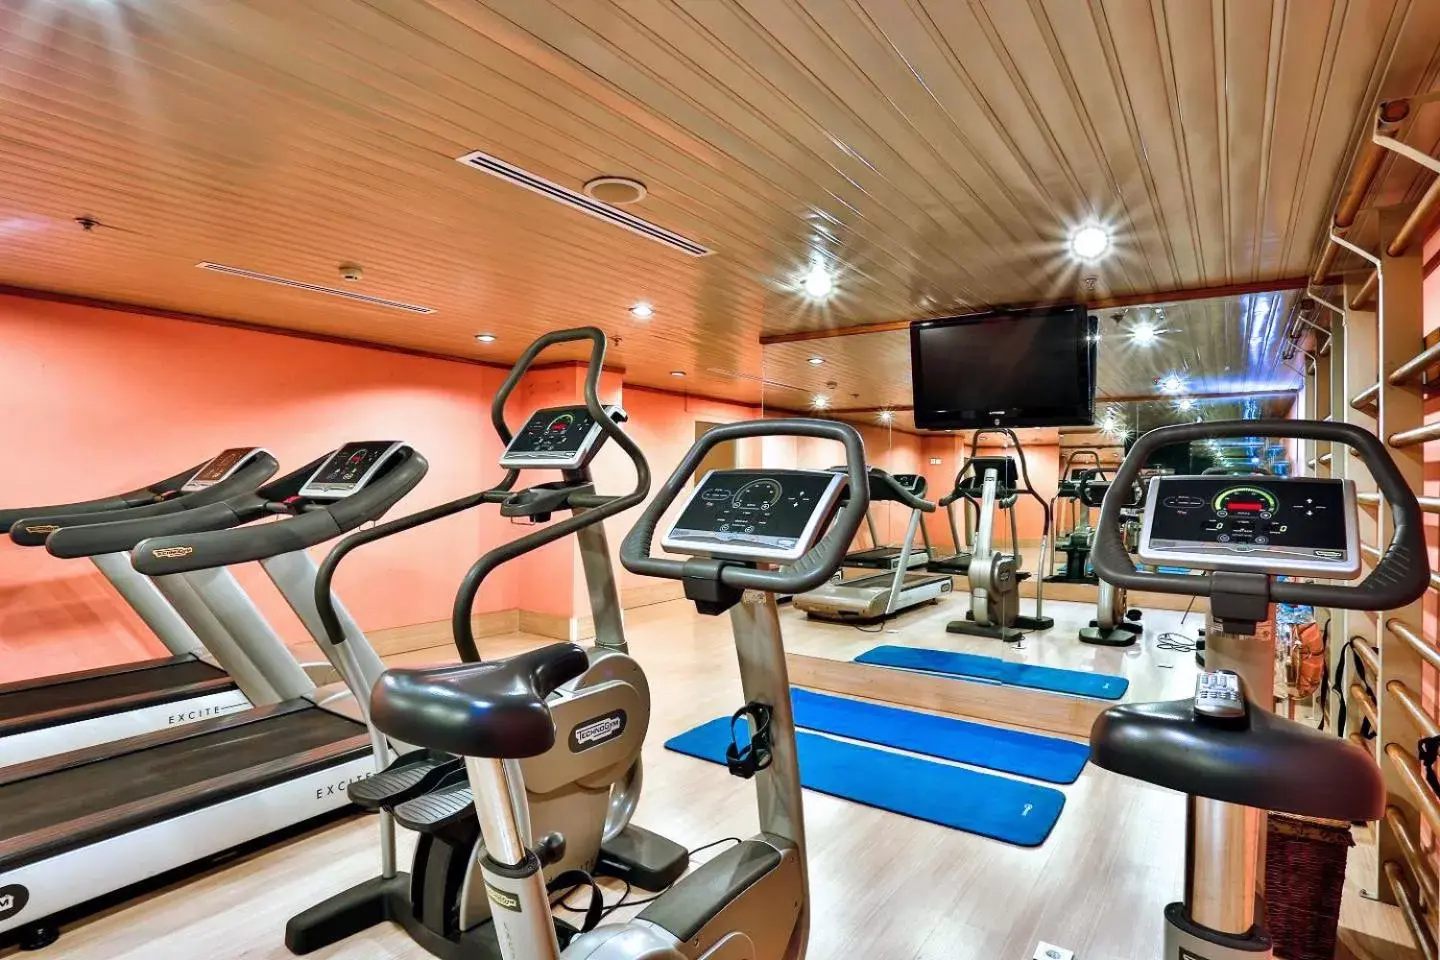 Fitness centre/facilities, Fitness Center/Facilities in Geneva Hotel